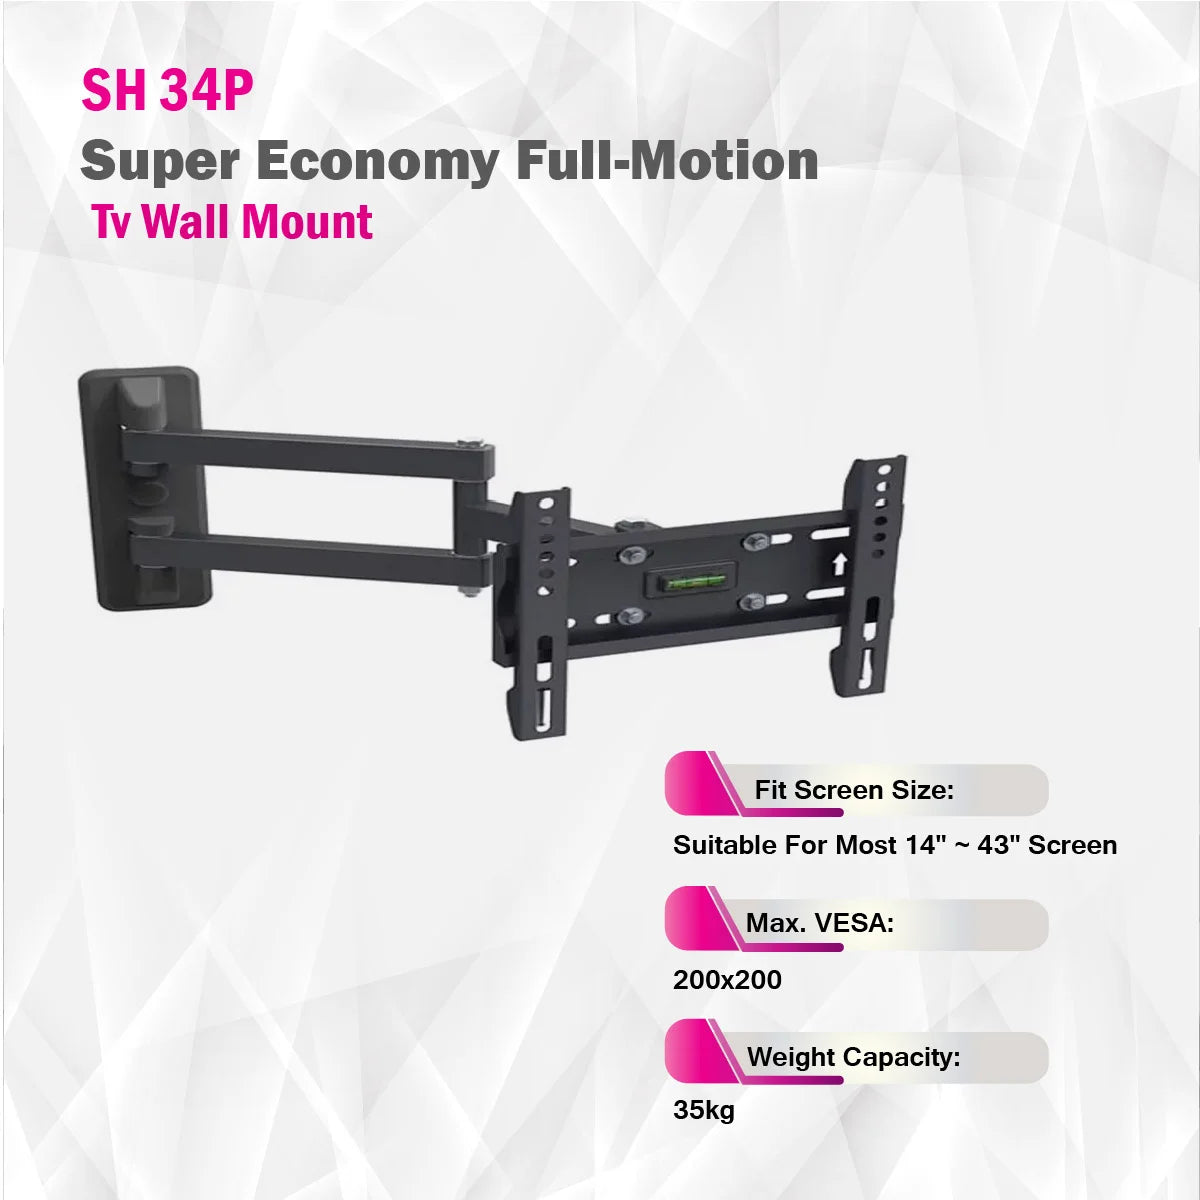 SkillTech - SH 34P - Super Economy Full-Motion Tv Wall Mount